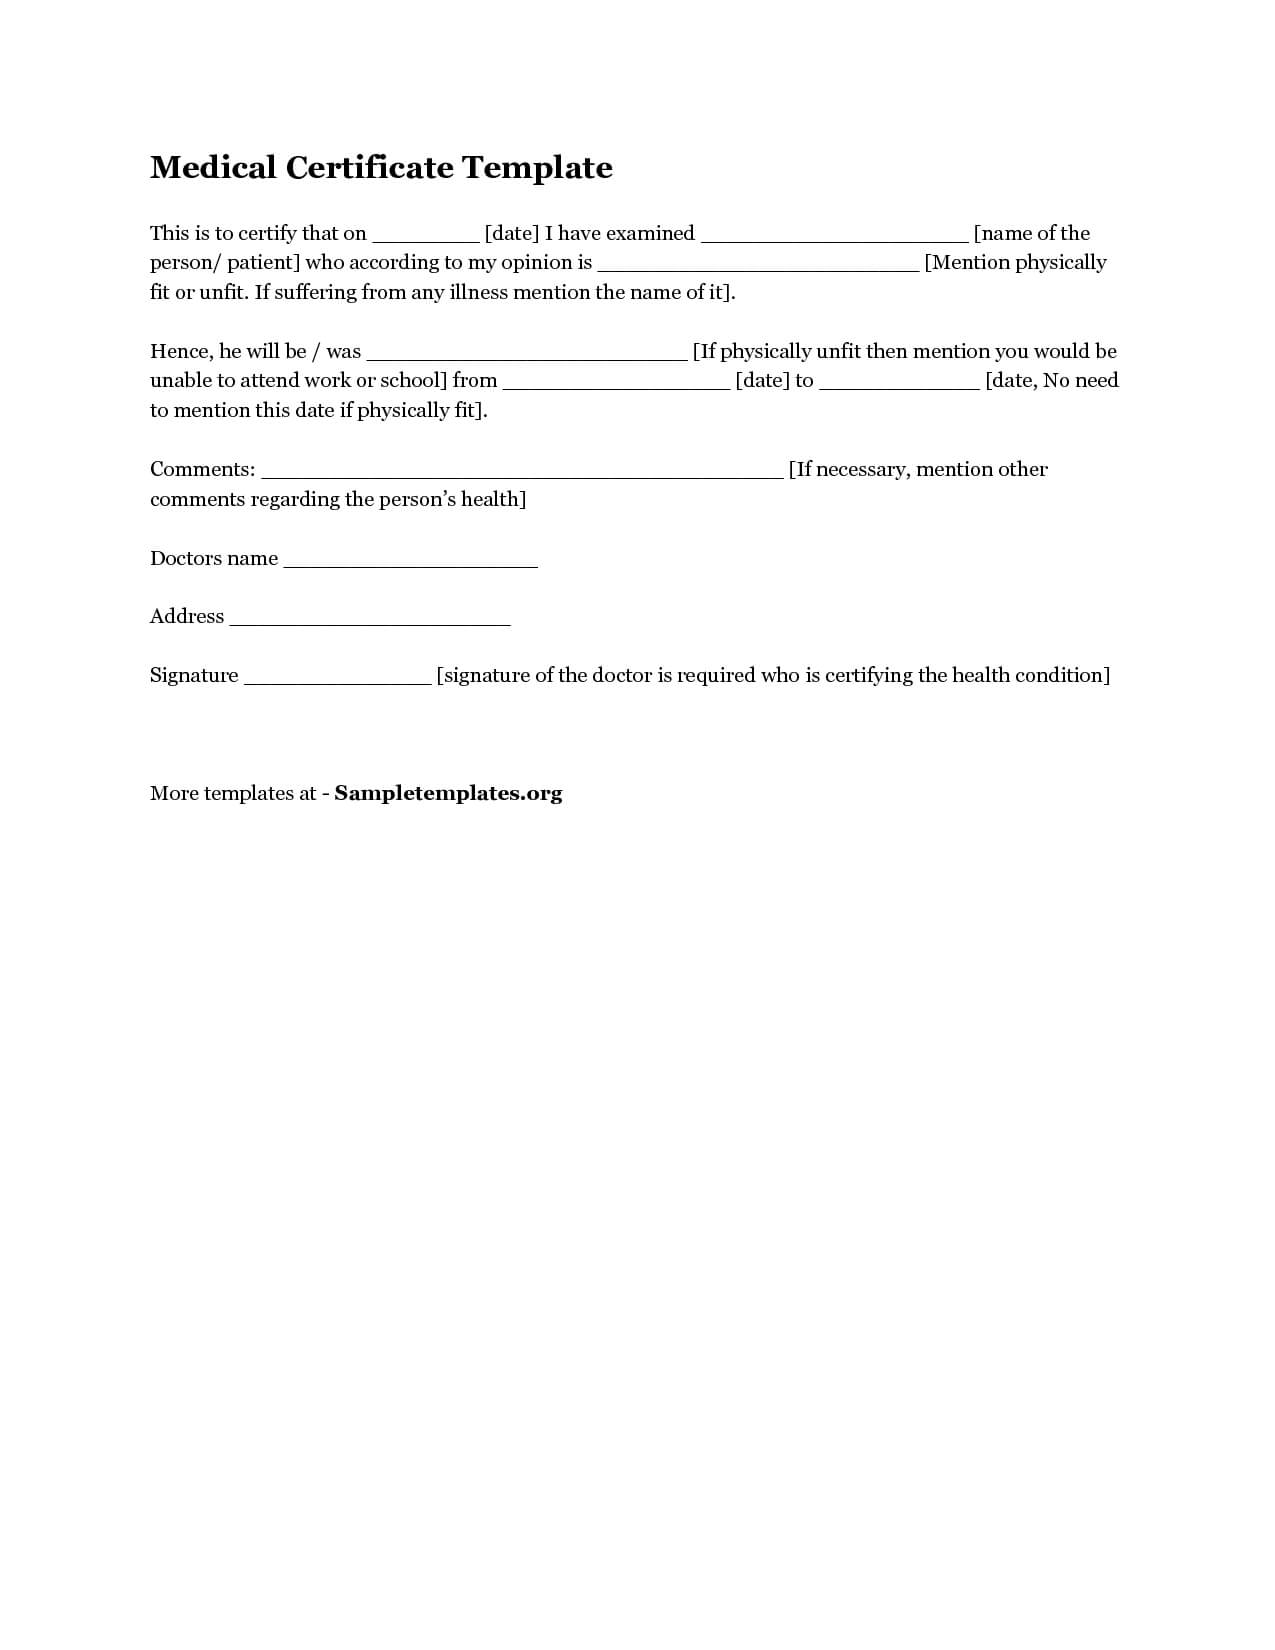 Download Medical Certificate Template1 | Certificate In Fake Medical Certificate Template Download